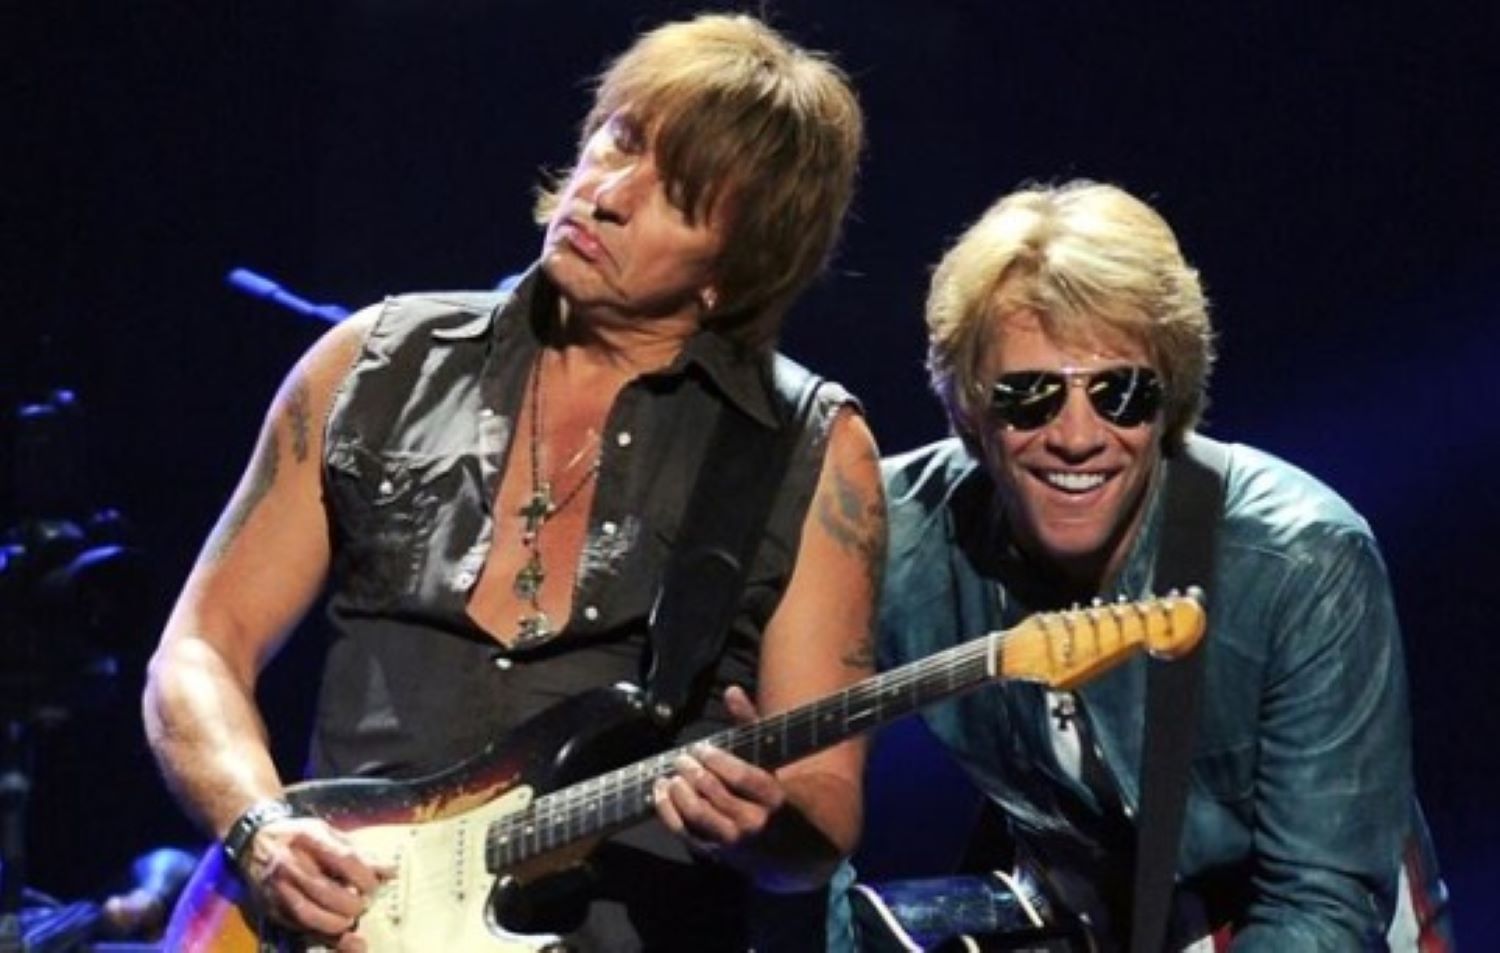 Exclusive Bon Jovi Reunion Coming As Richie Sambora Will Be Special